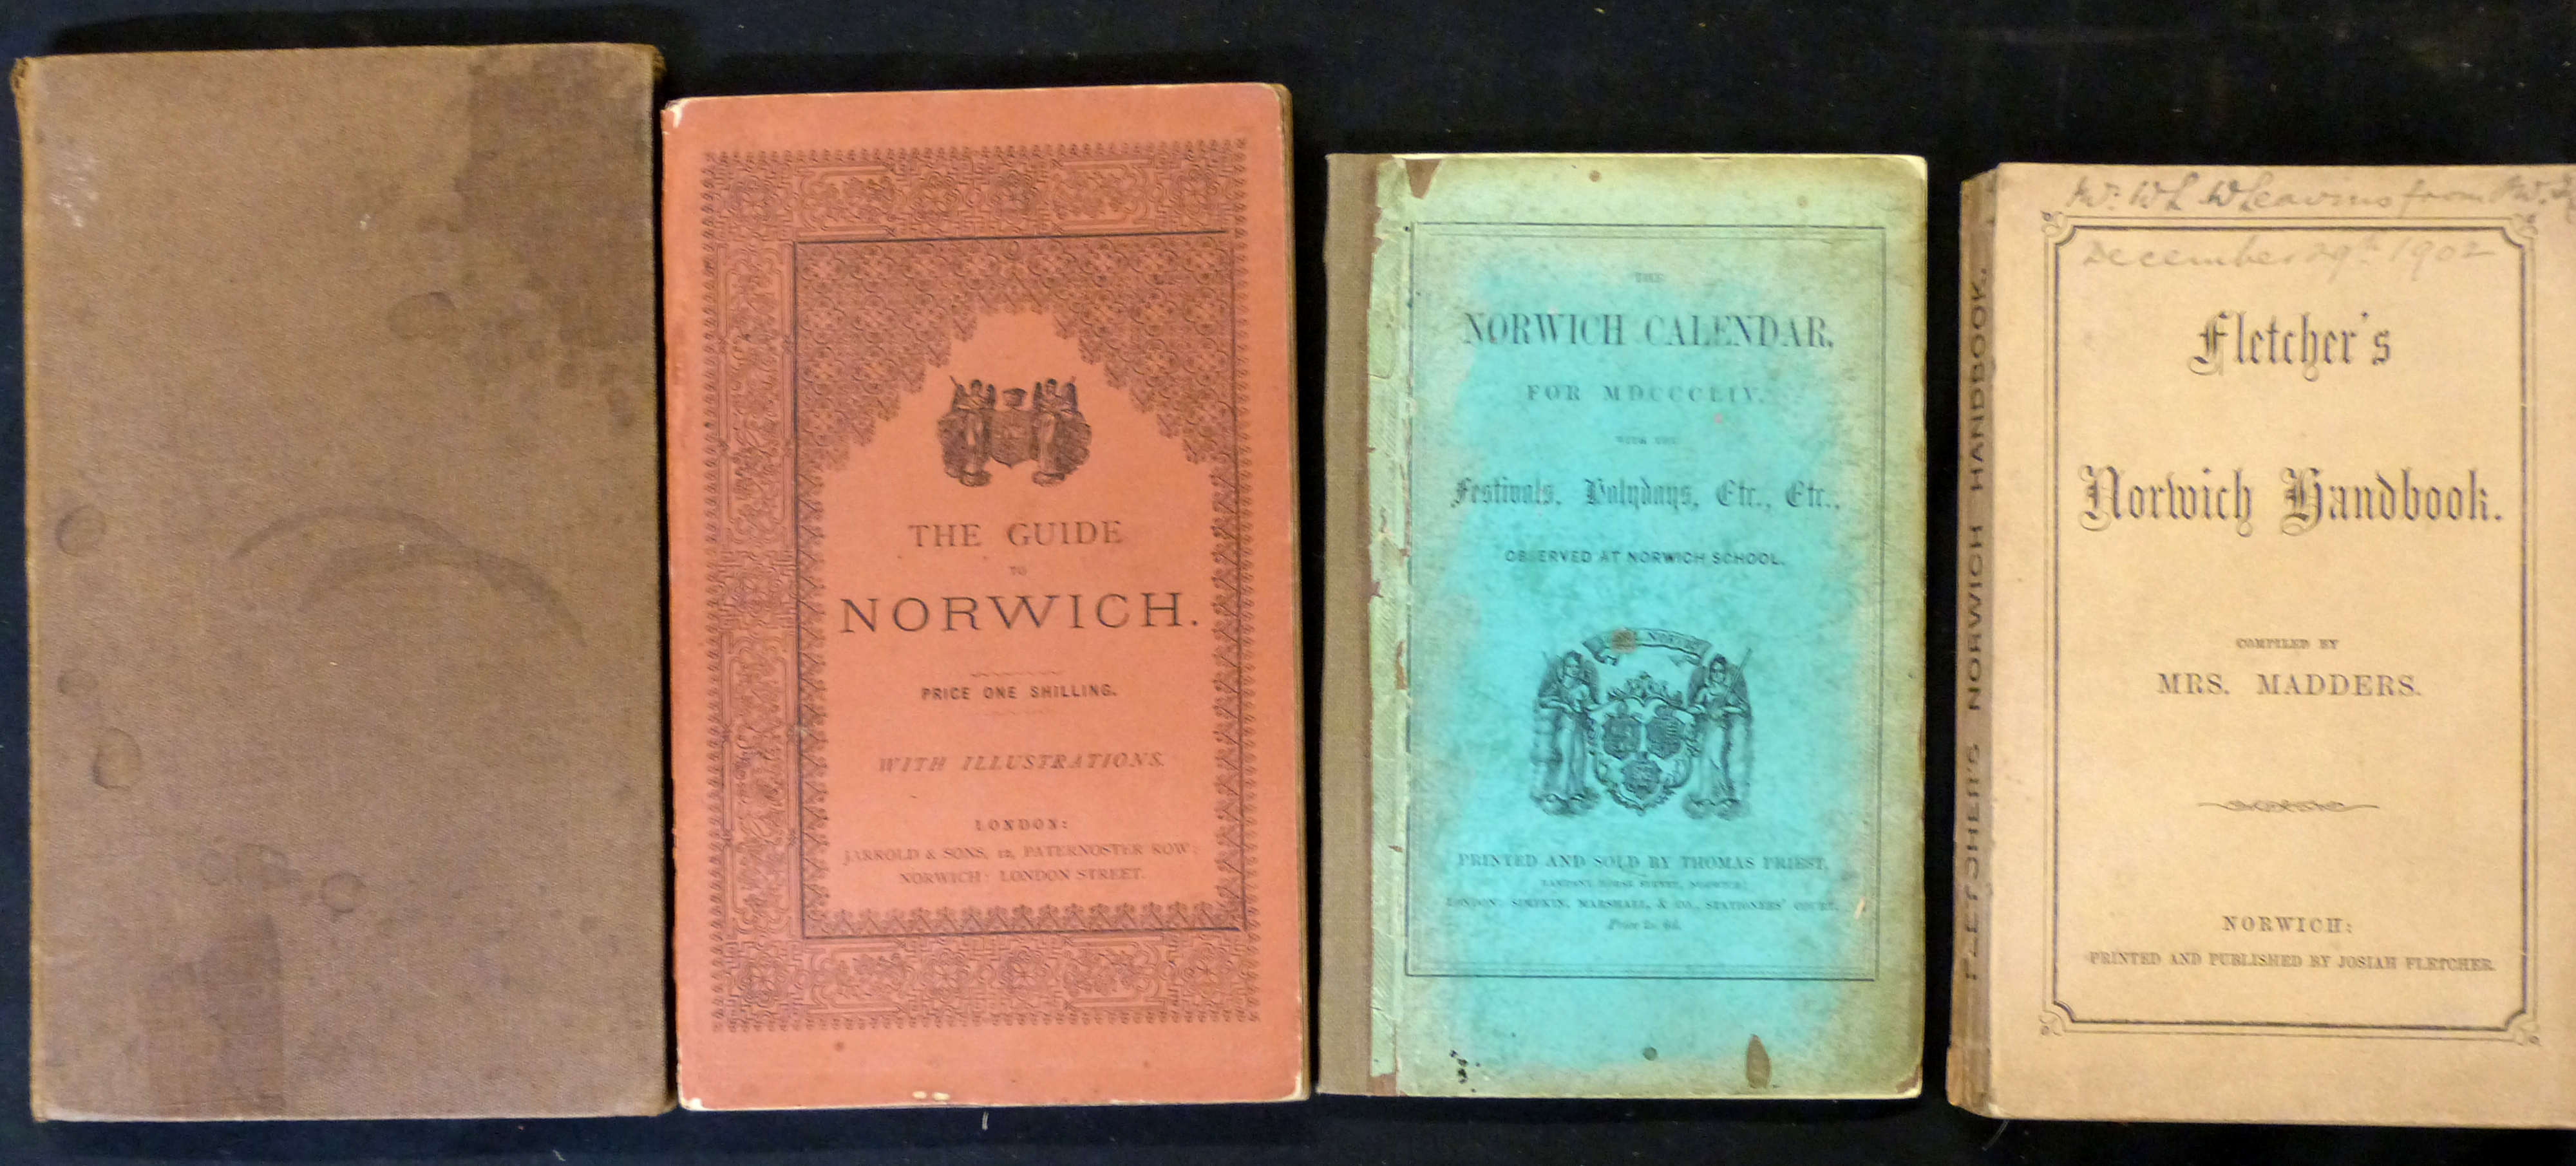 SUSAN SWAIN MADDERS (ED): FLETCHER'S NORWICH HANDBOOK, Norwich, Josiah Fletcher, 1857, 1st